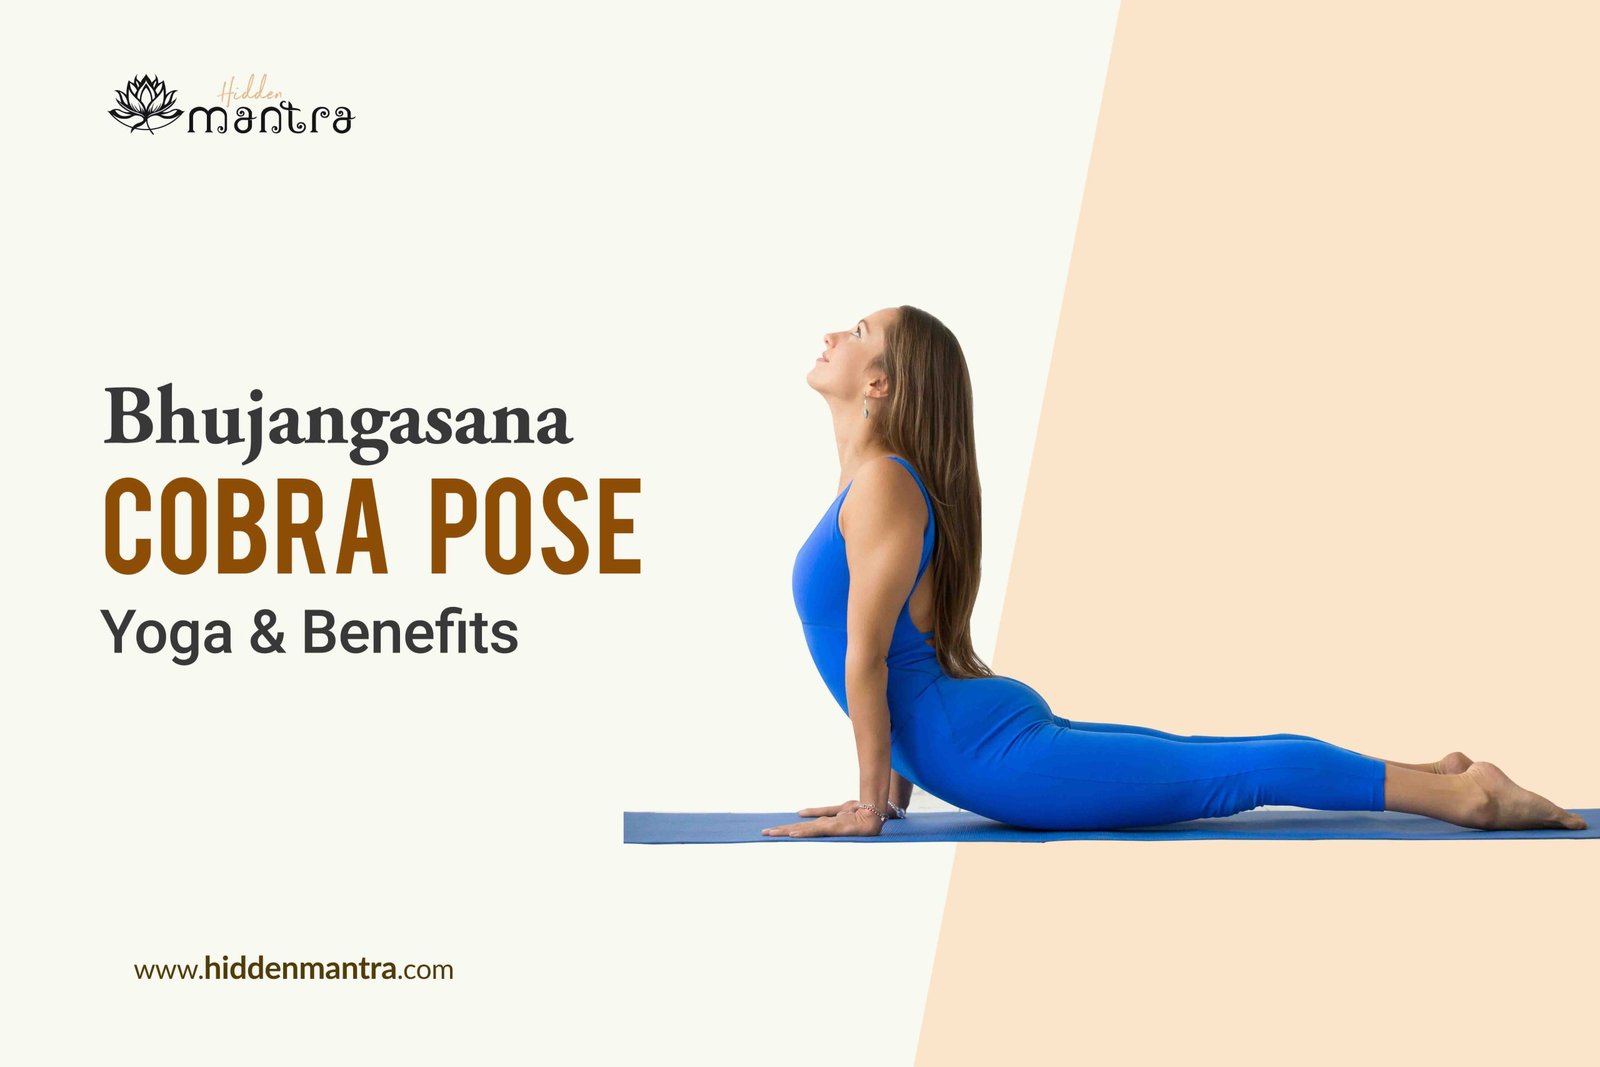 Dhanurasana (Bow Pose): Steps, Image, Benefits and more